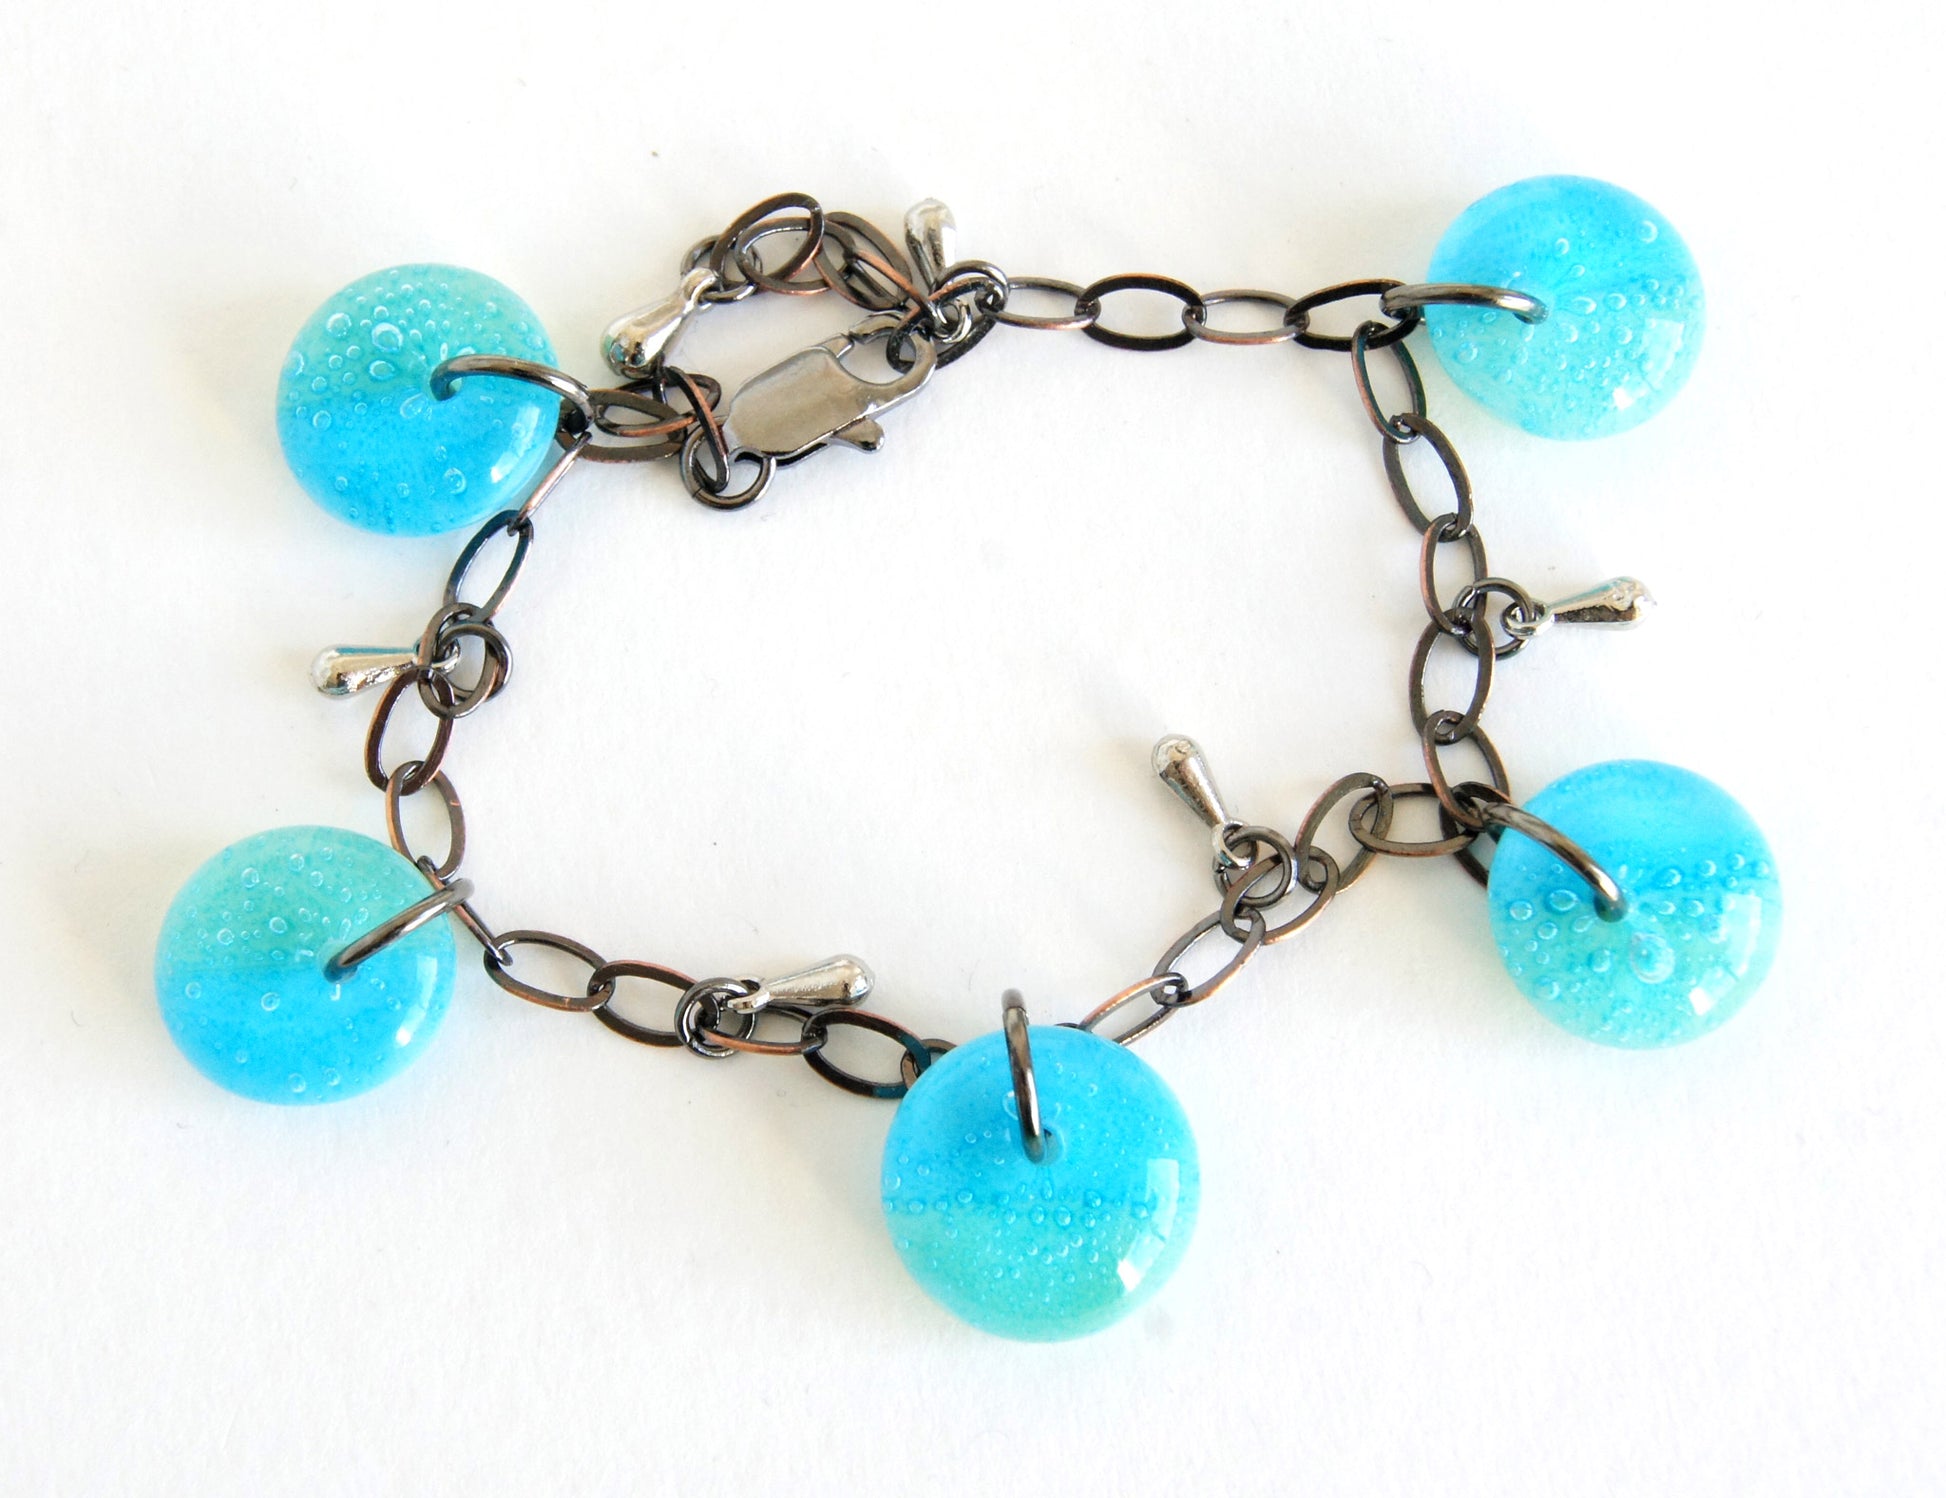 Handmade turquoise and aqua blue glass bracelet